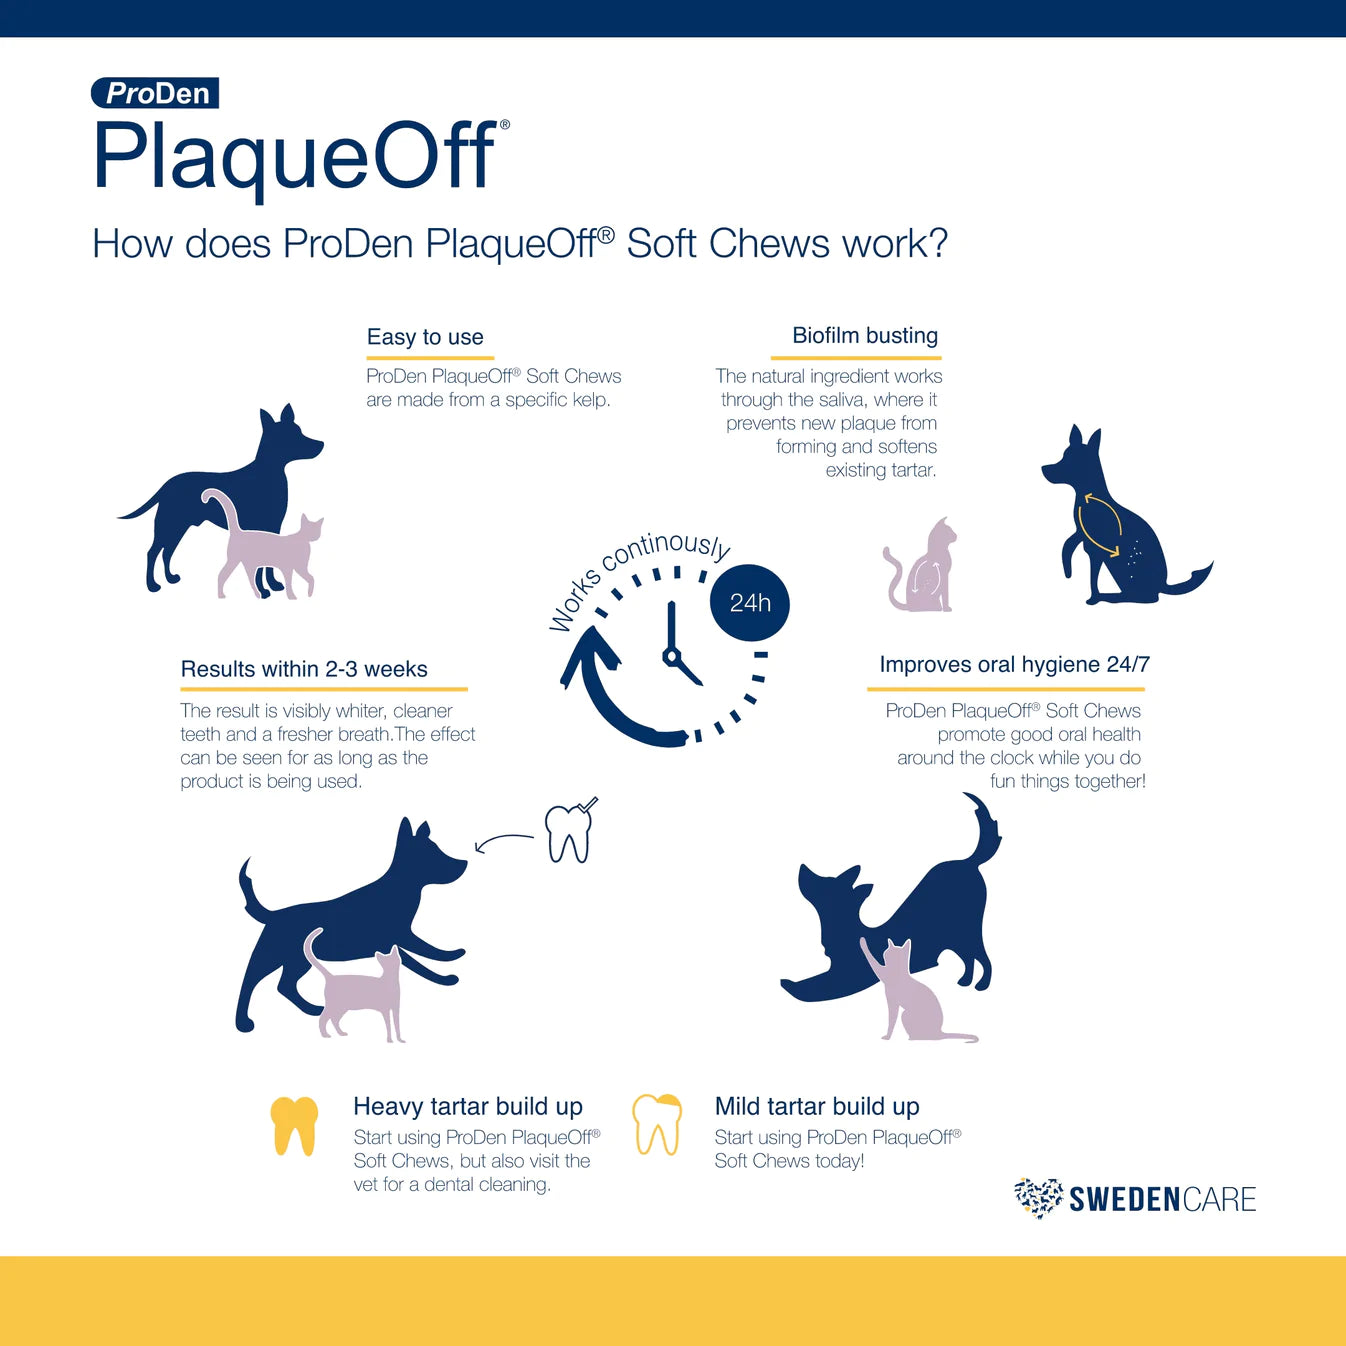 PlaqueOff Dog Soft Chew 45 ct s/m-Four Muddy Paws